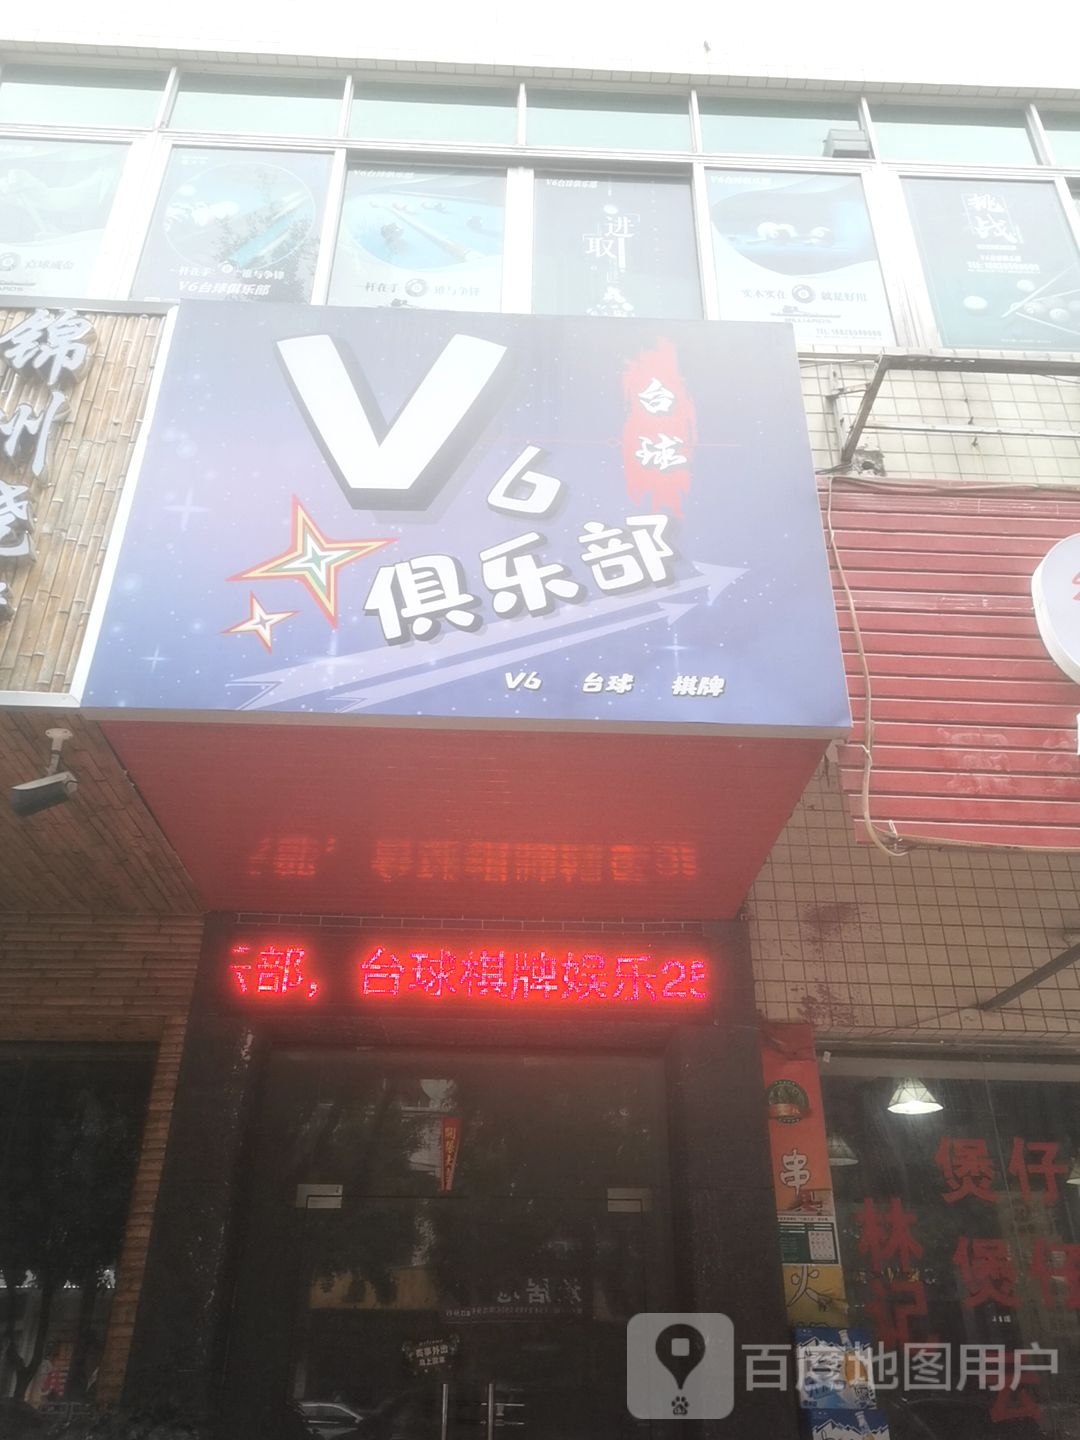 V6台球俱乐部·棋牌(广泰商业街店)